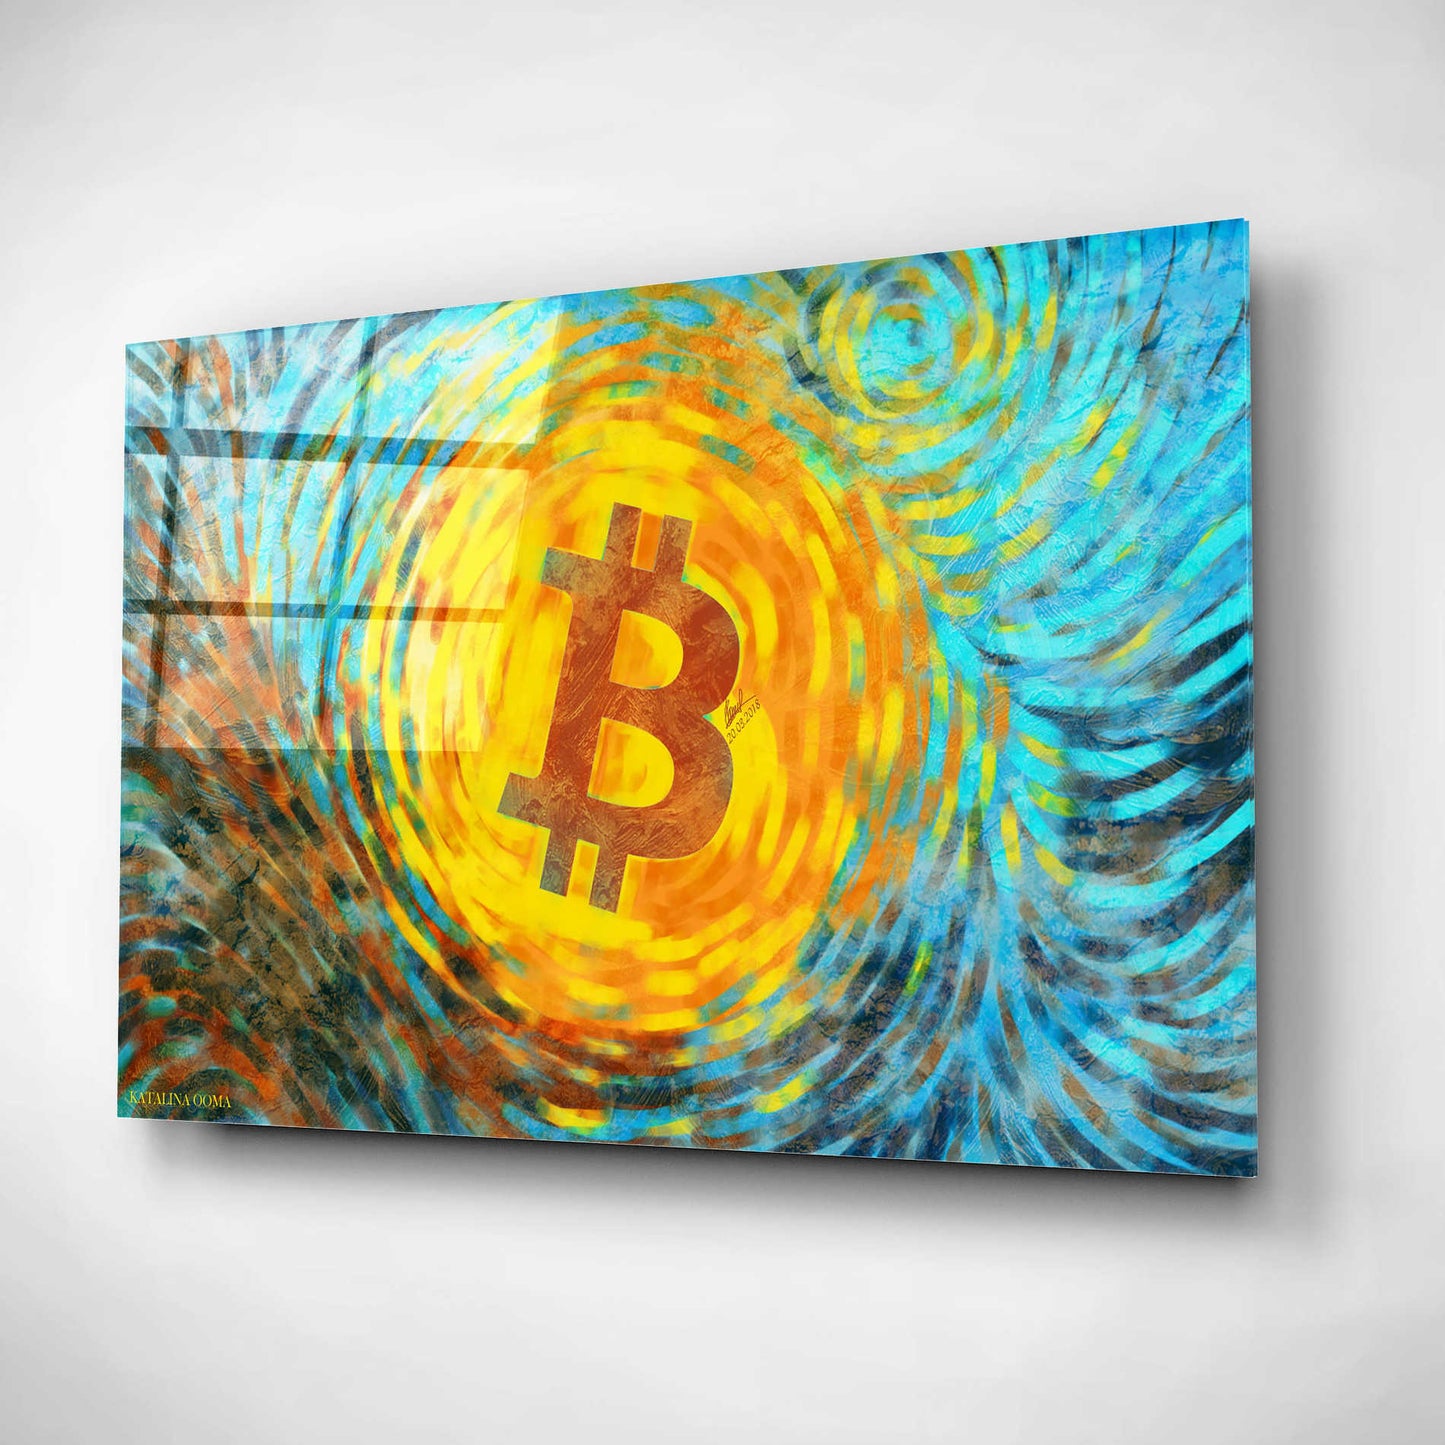 Epic Art 'Van Gogh Bitcoin' by Katalina, Acrylic Glass Wall Art,24x16